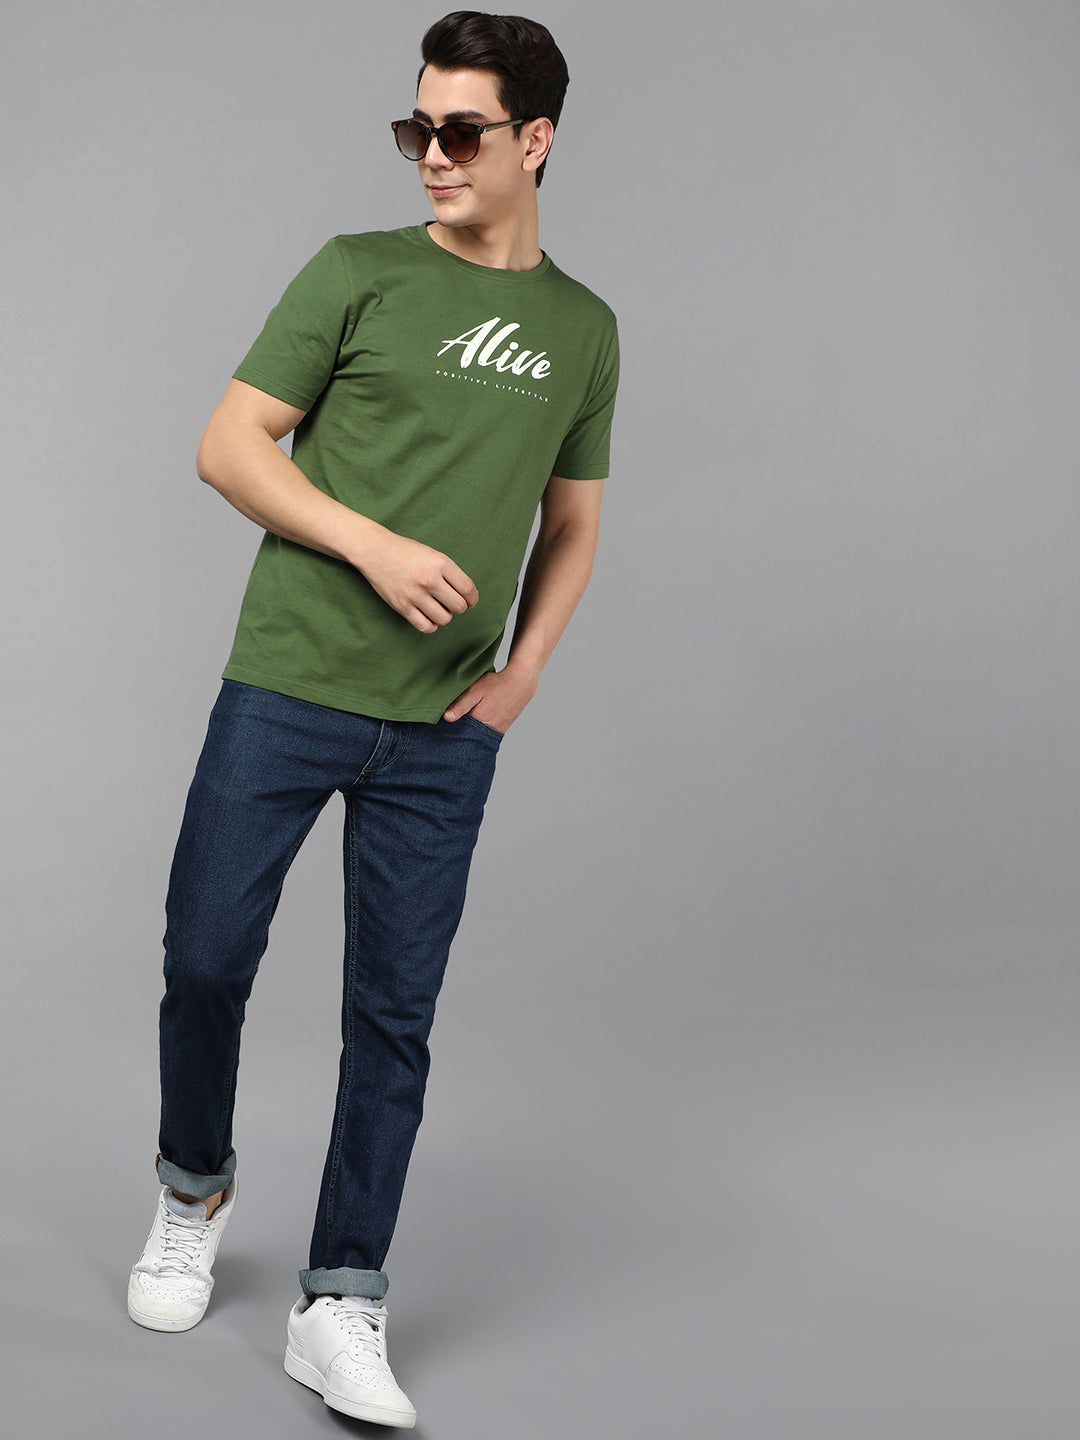 Tom's Alive - Printed Men's Tshirt - Dry Olive Green